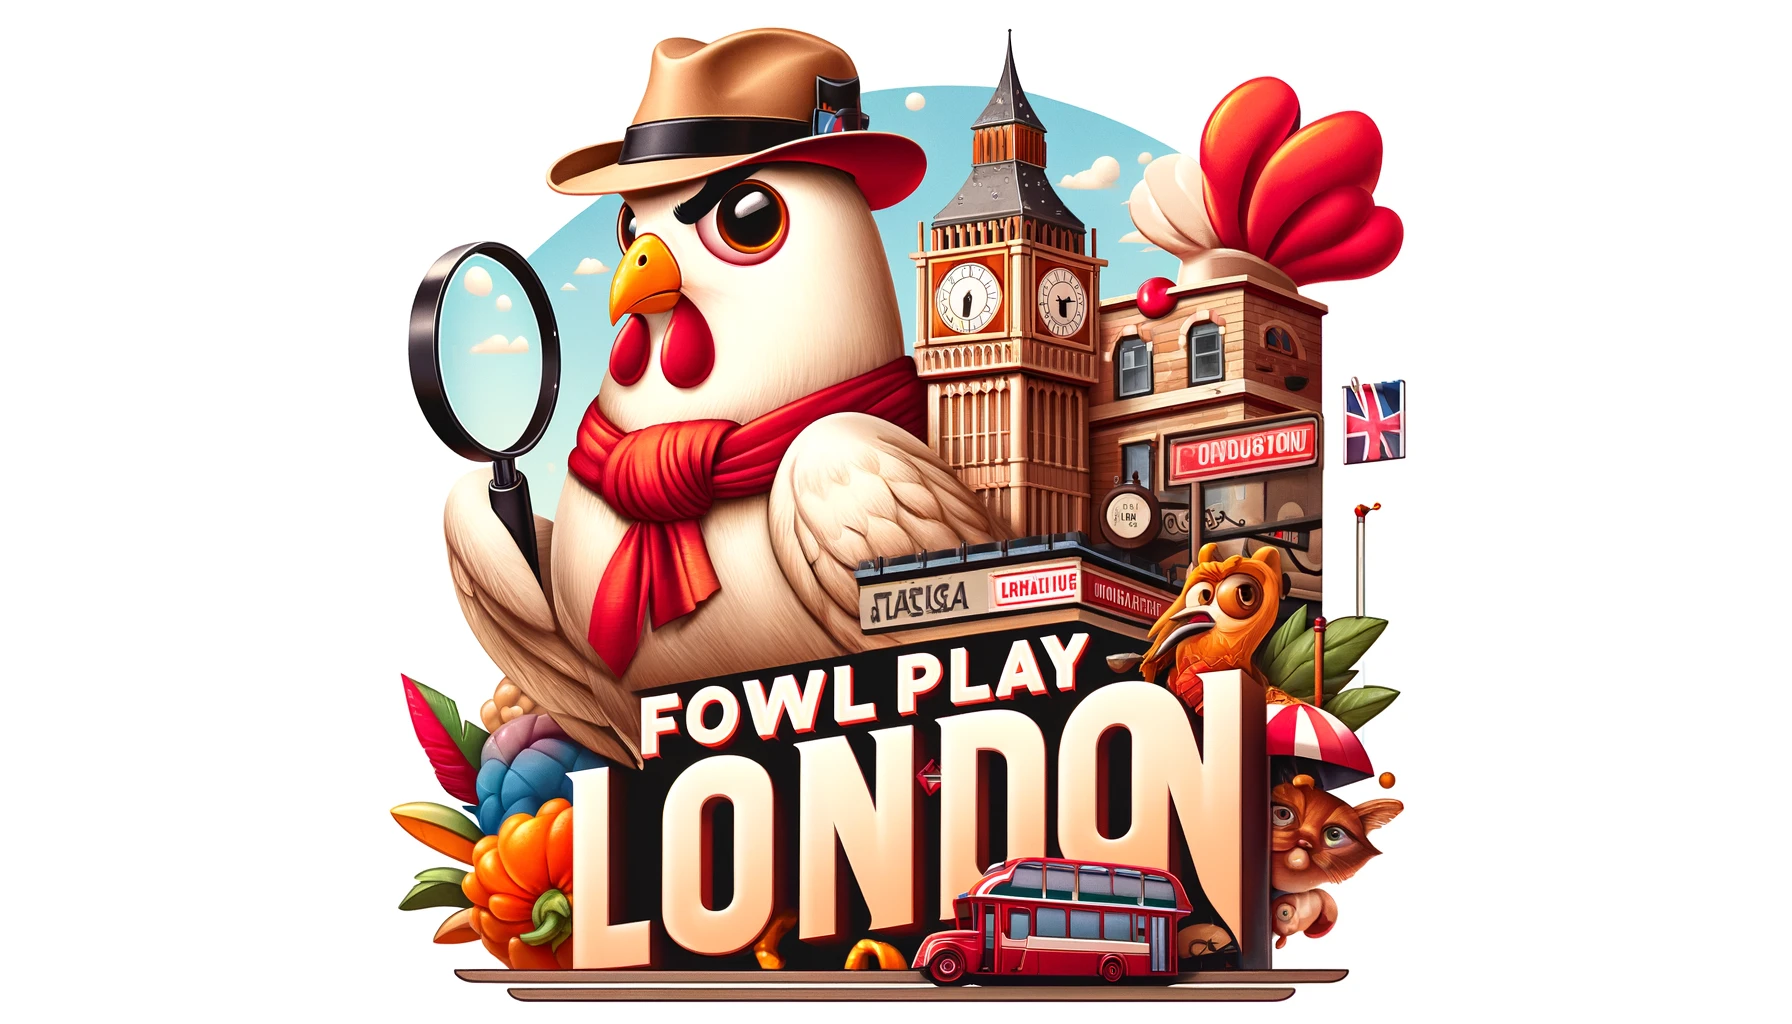 Play Fowl Play London Slot.